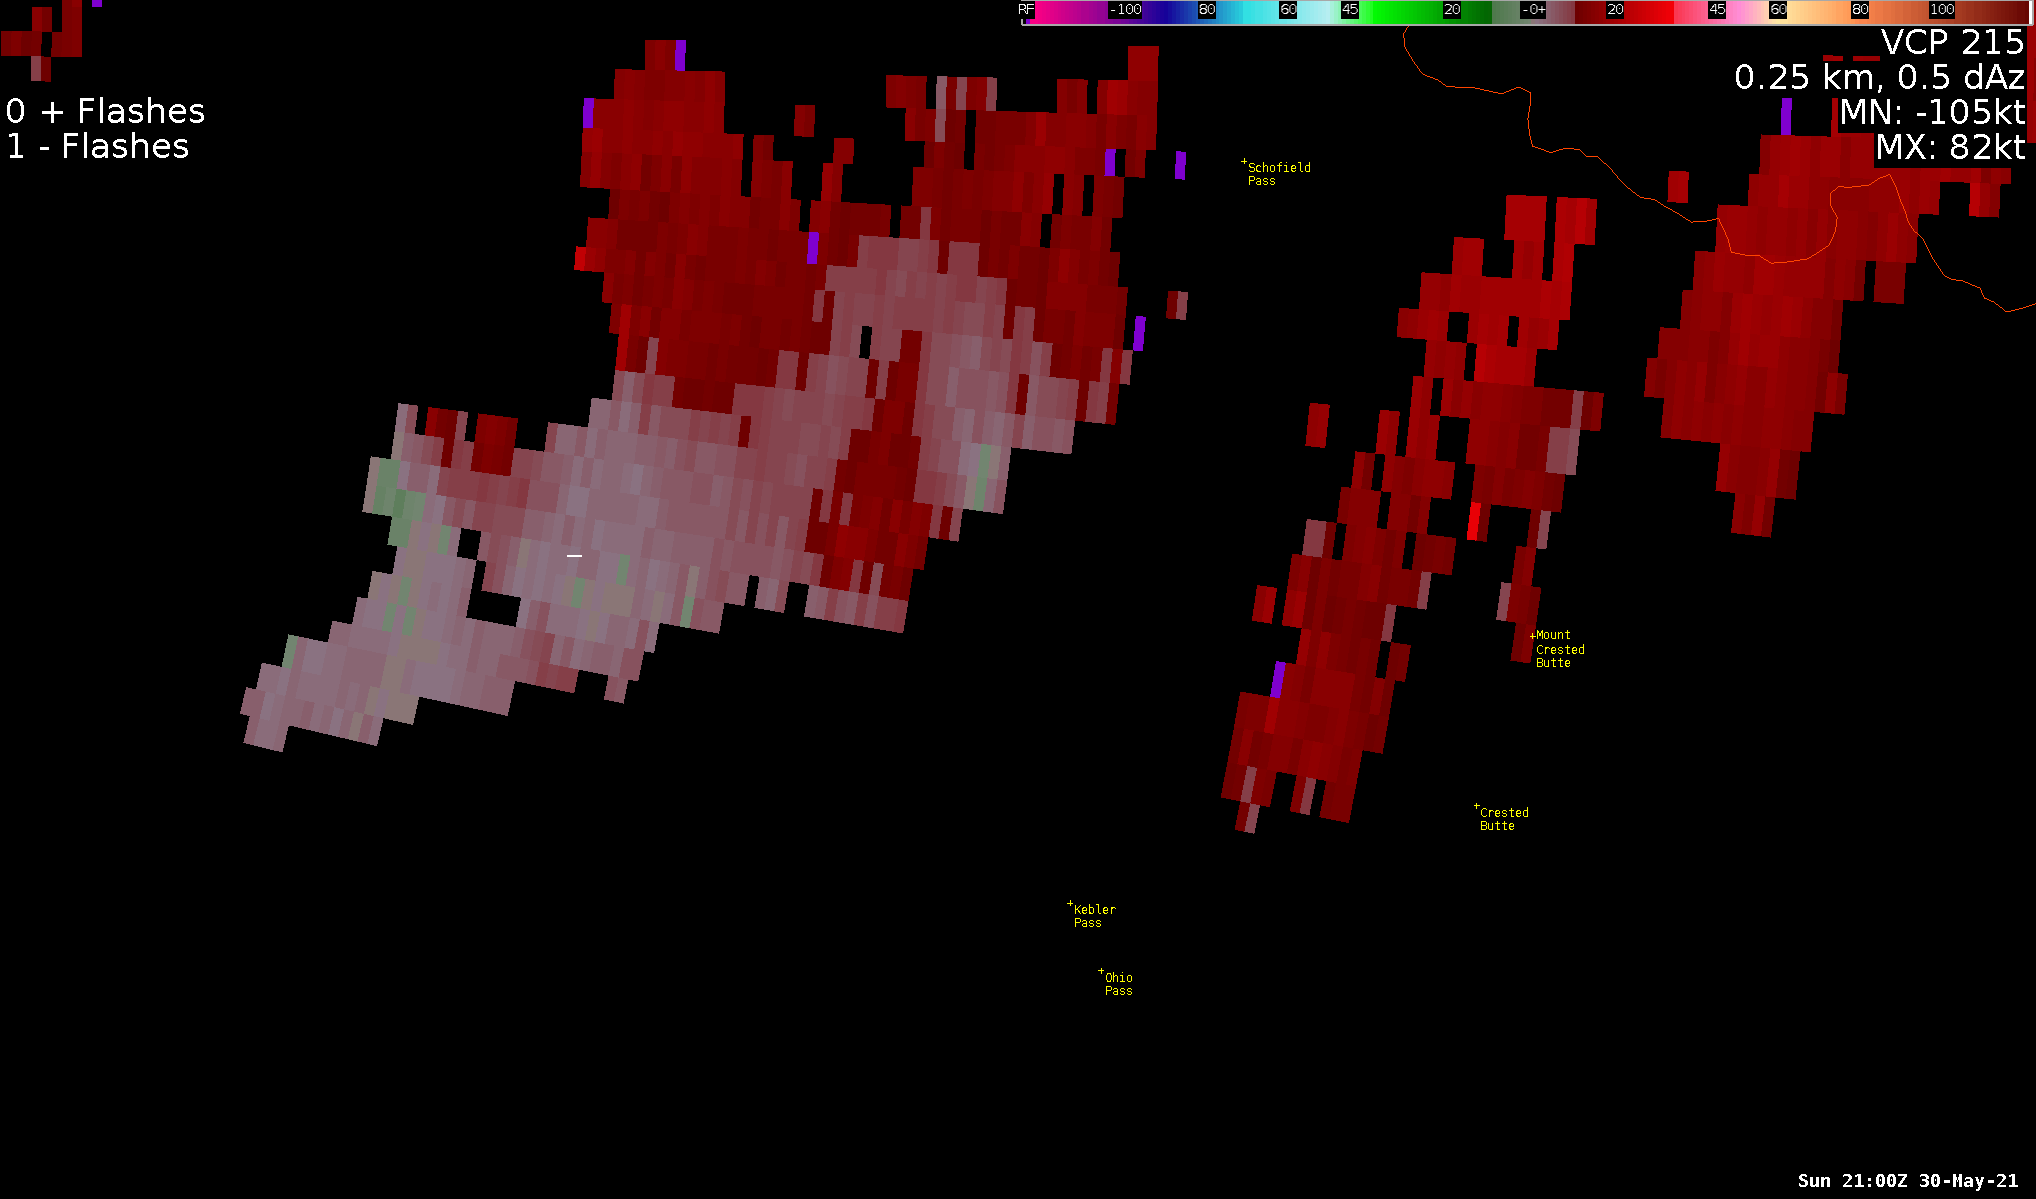 Radar storm-relative velocity loop from KGJX WSR-88D radar during the event